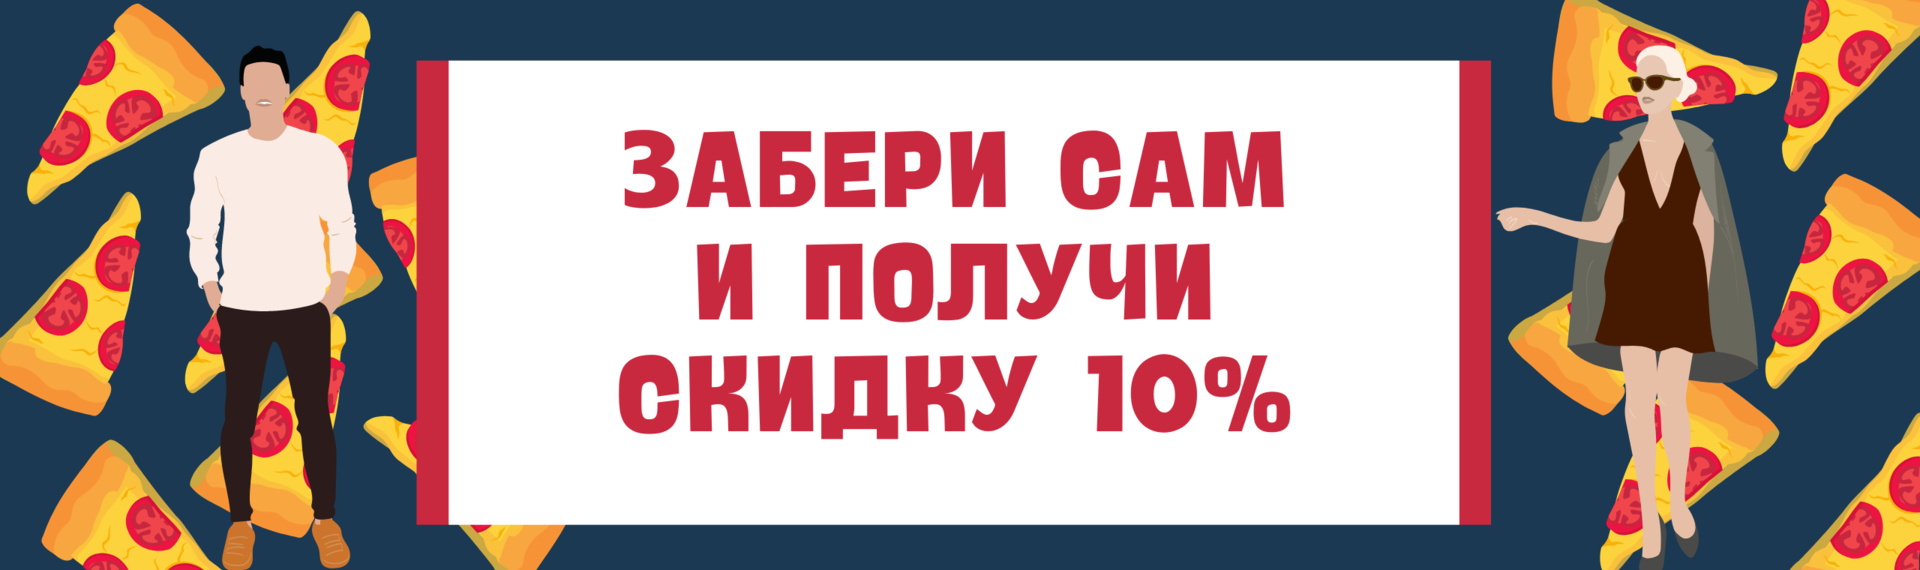 Банер: Забери сам и получи скидку 10%